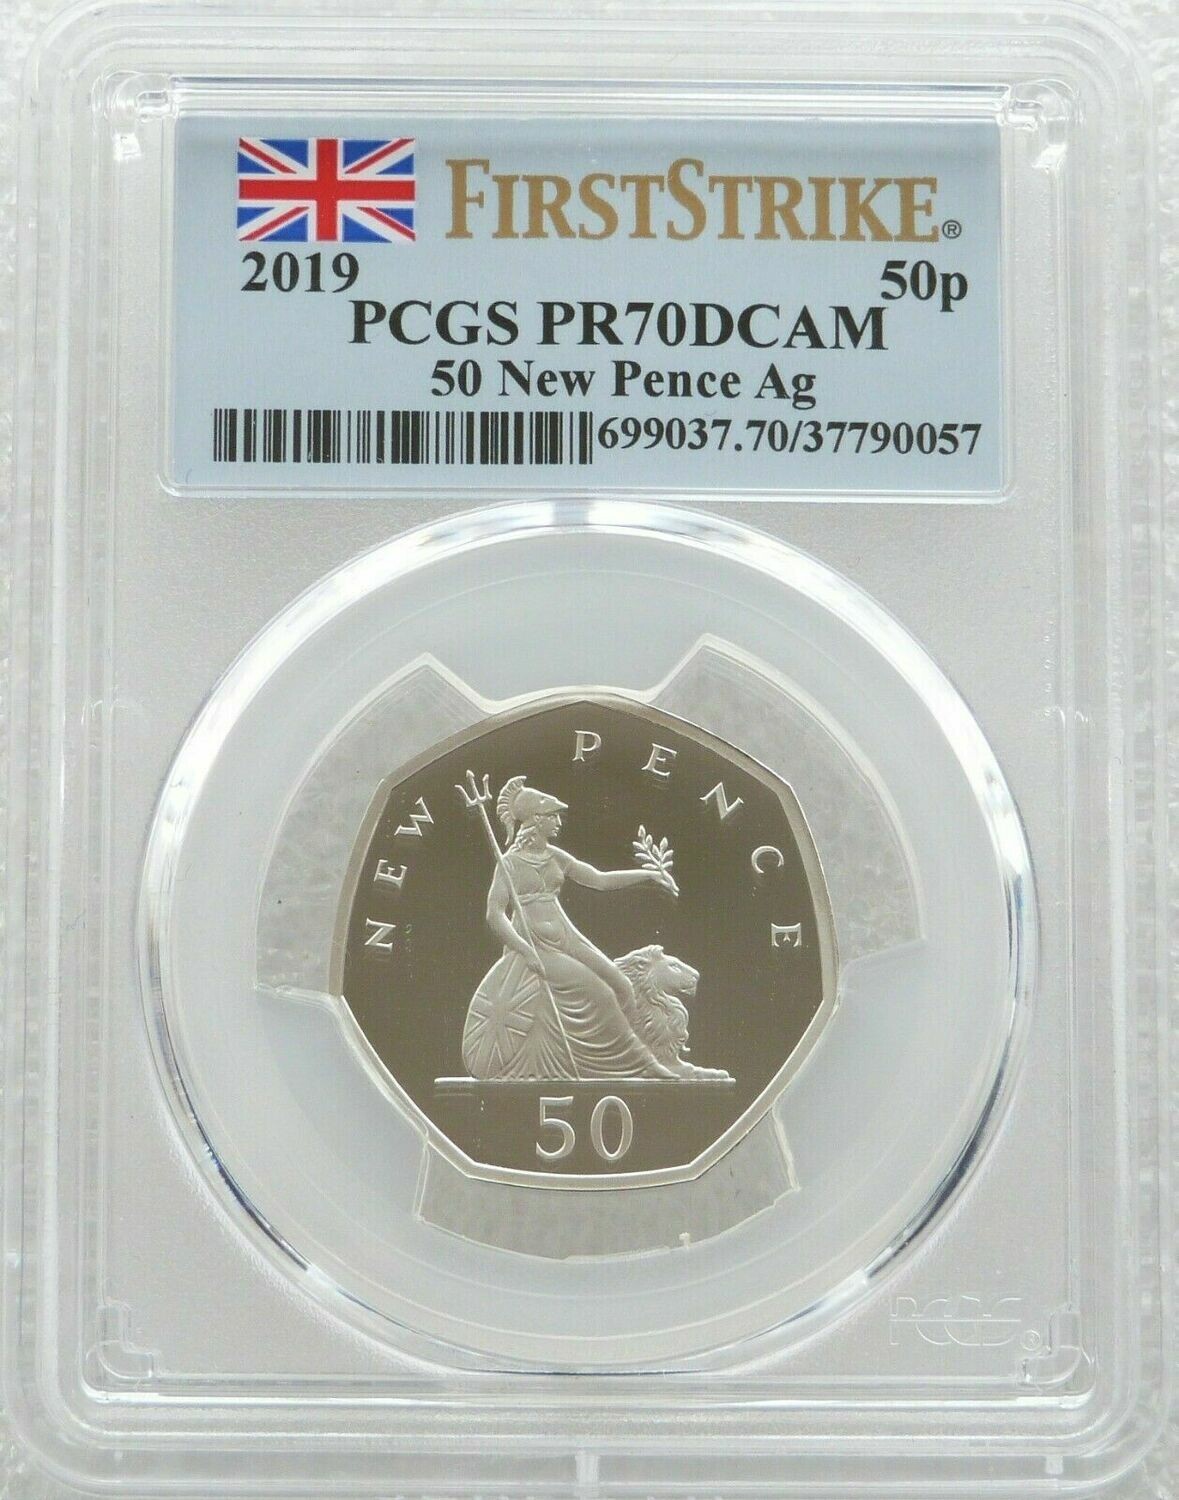 2019 Britannia New Pence 50p Silver Proof Coin PCGS PR70 DCAM First Strike